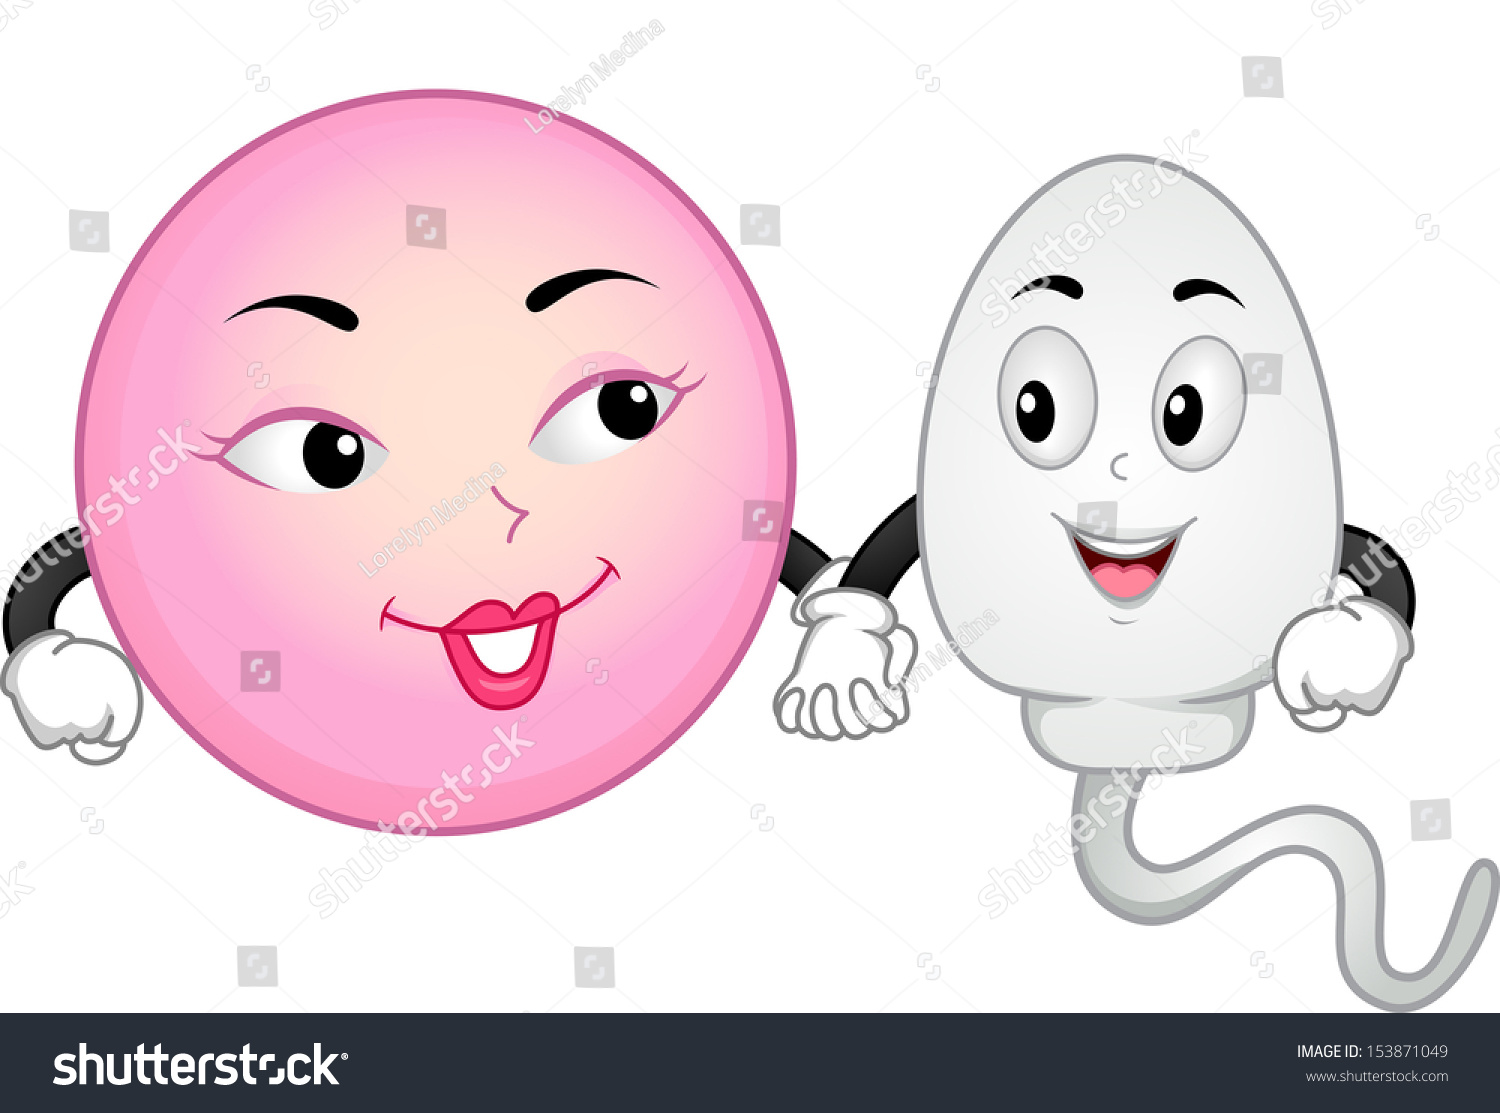 Mascot Illustration Featuring Egg Sperm Cell Stock Vector 153871049